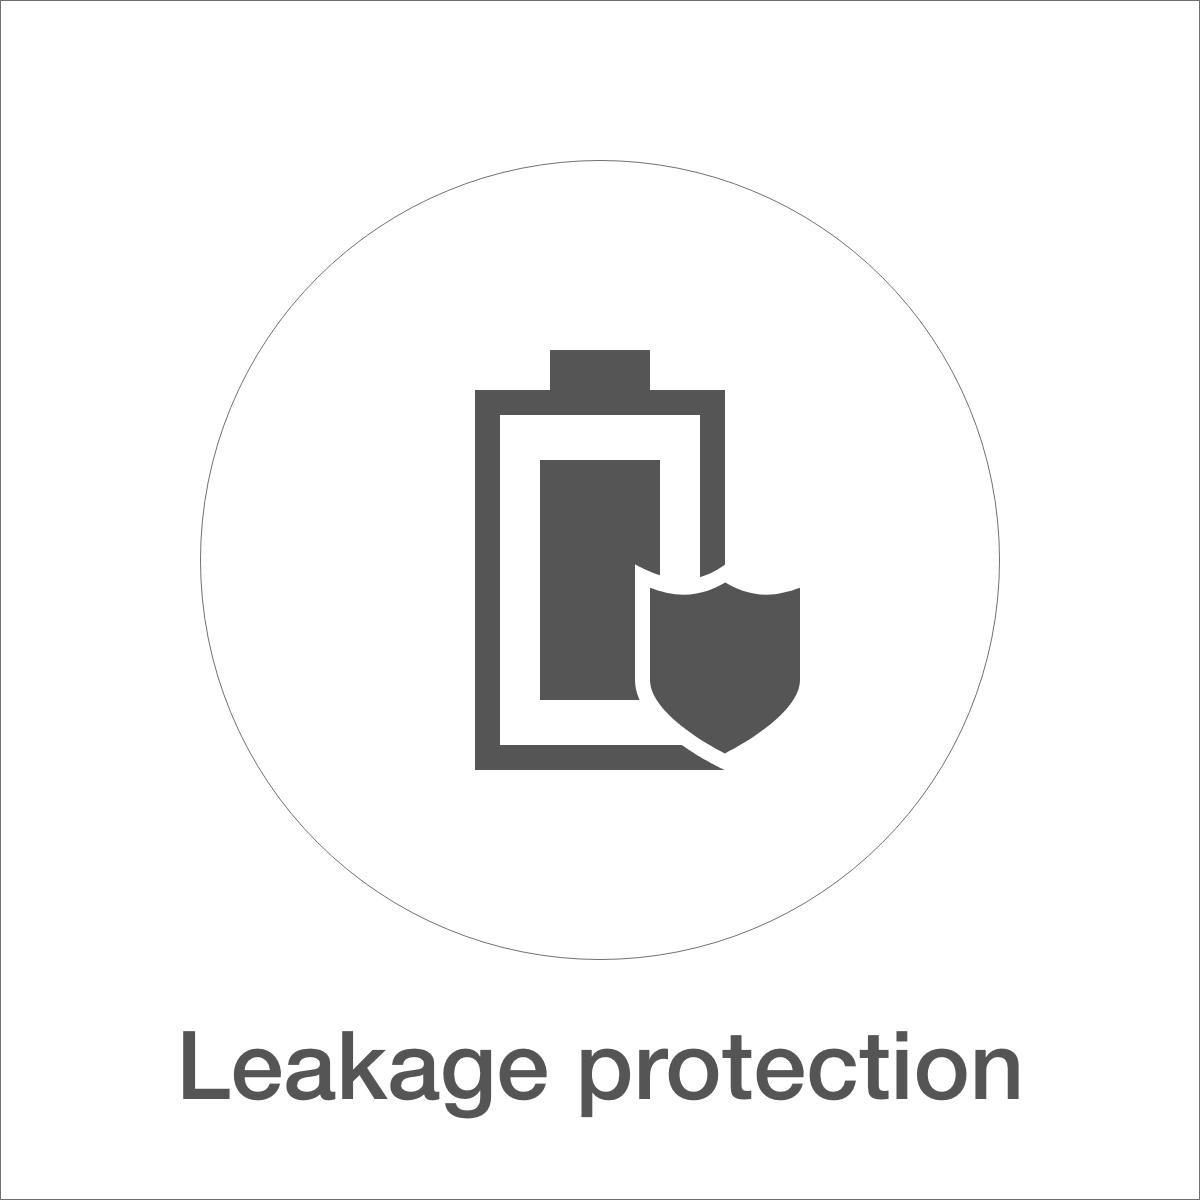 Leakage protection icon